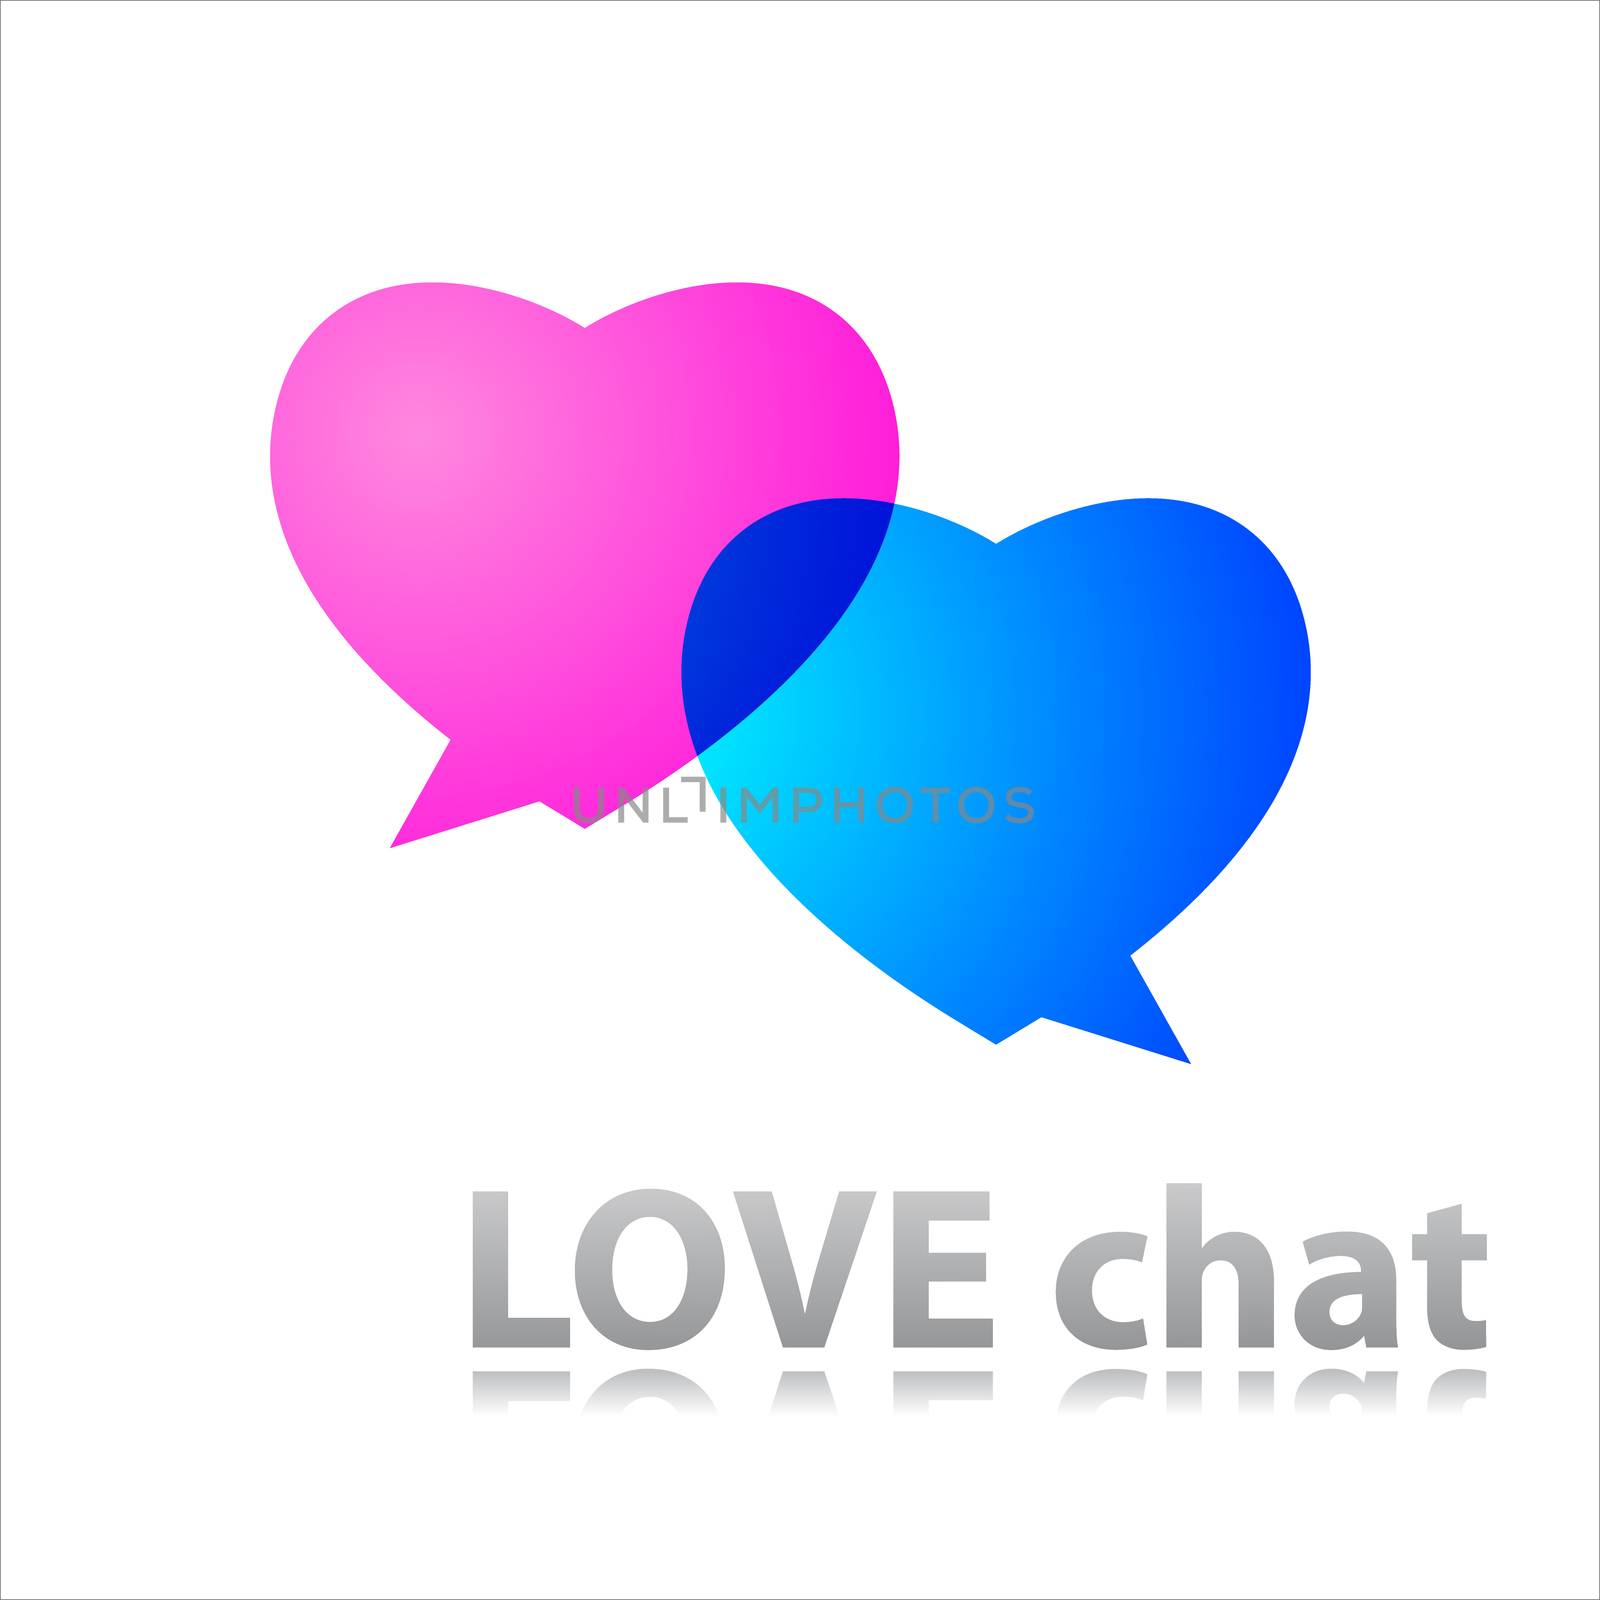 Love-chat - speech bubble.